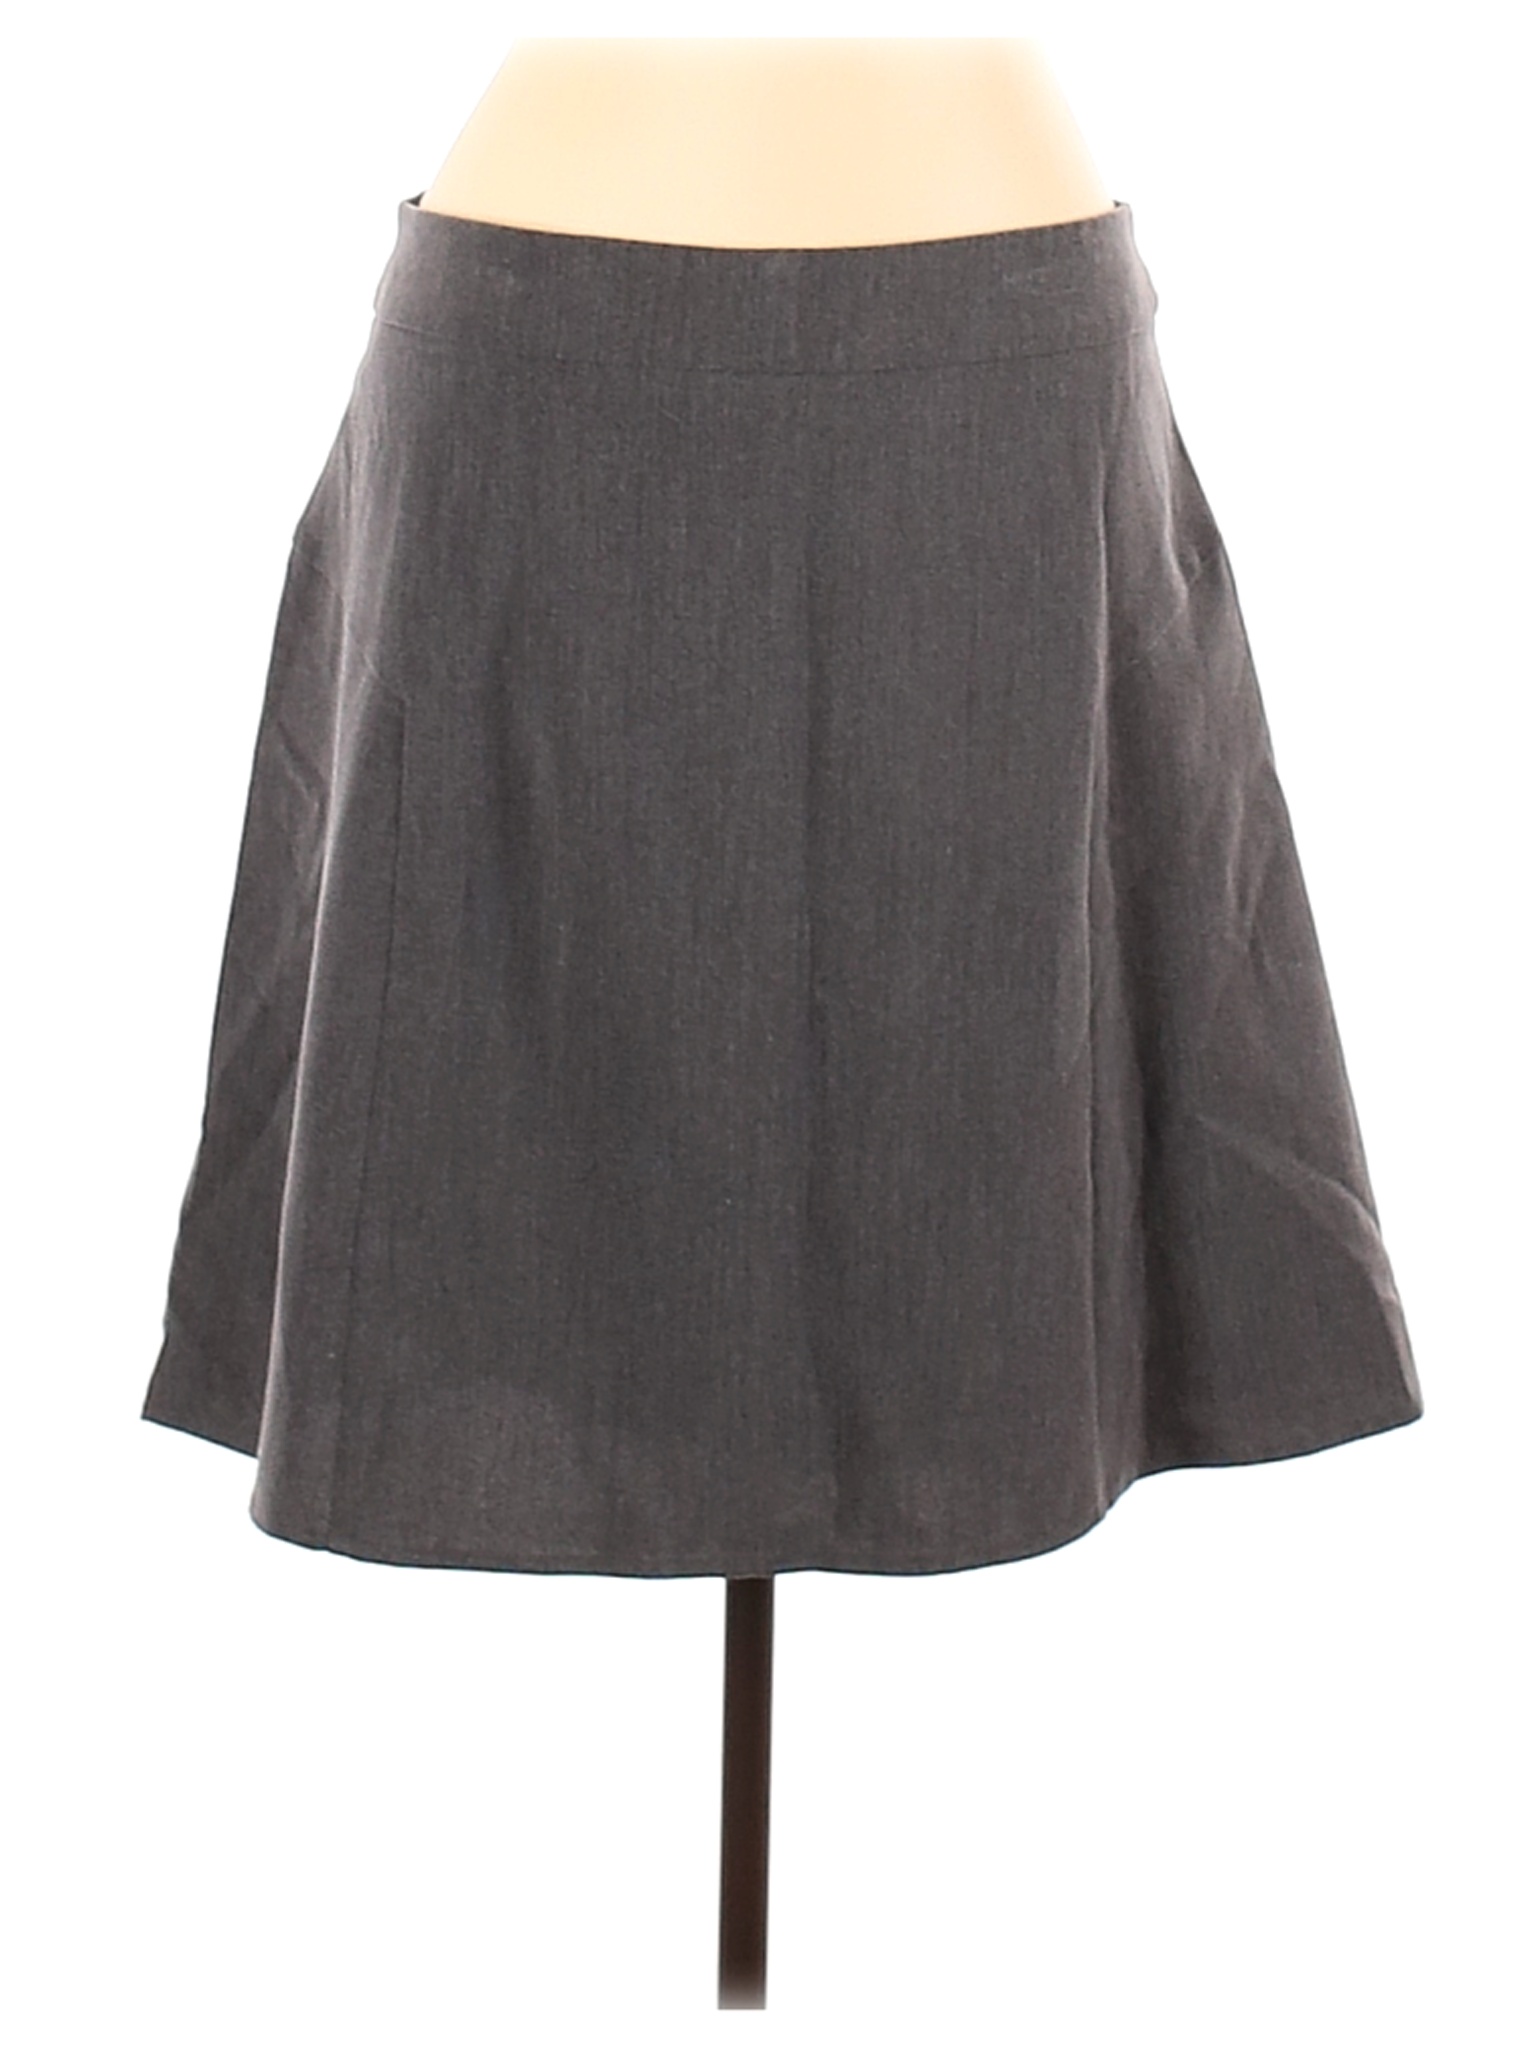 SOHO Apparel Ltd Women Gray Casual Skirt 12 | eBay